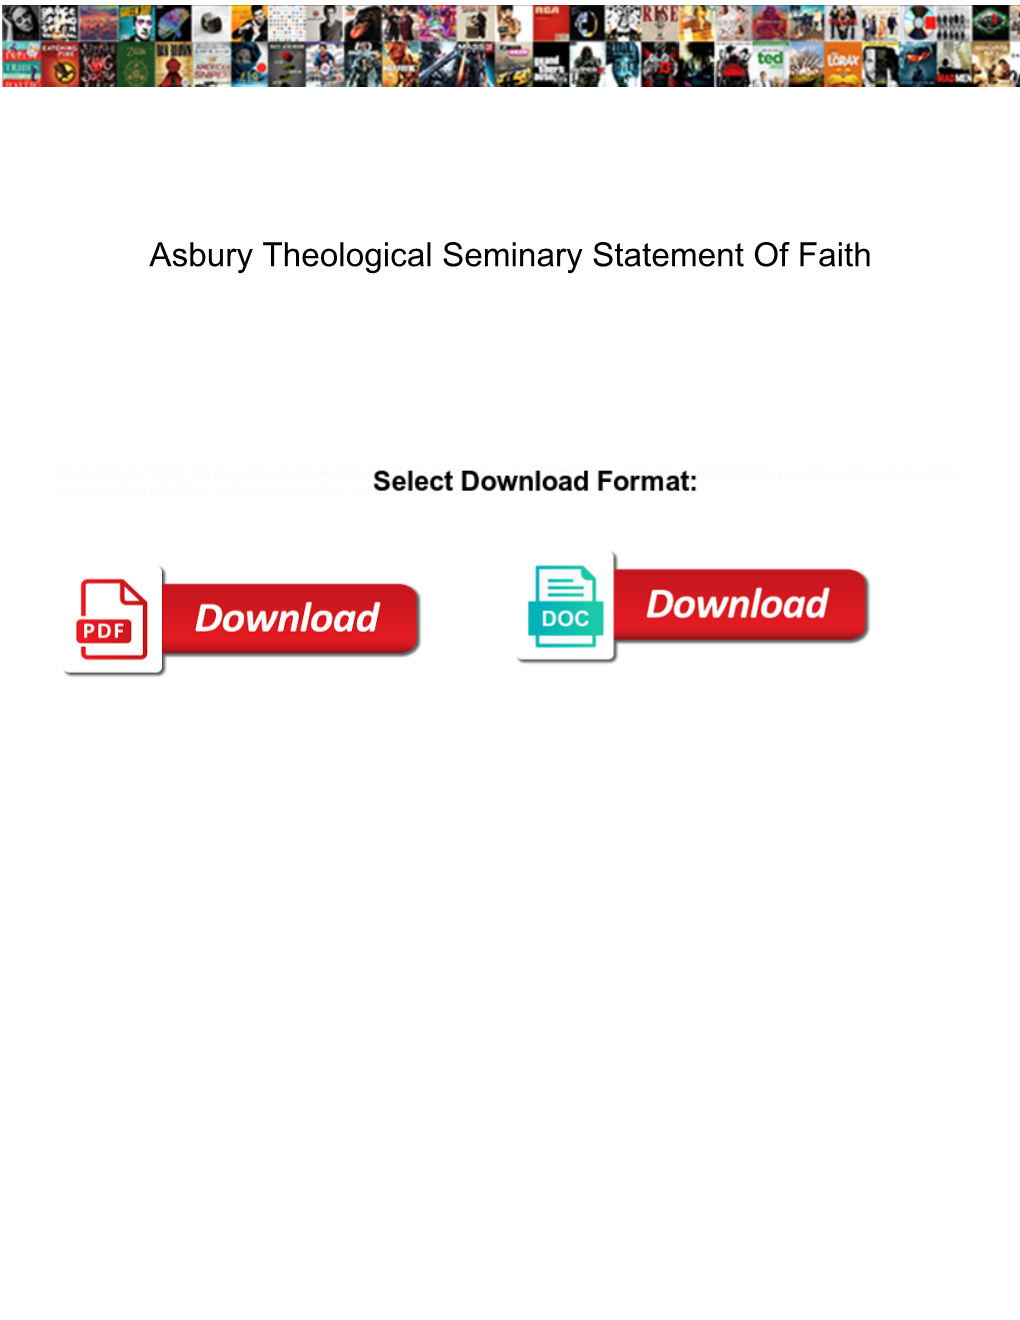 Asbury Theological Seminary Statement of Faith